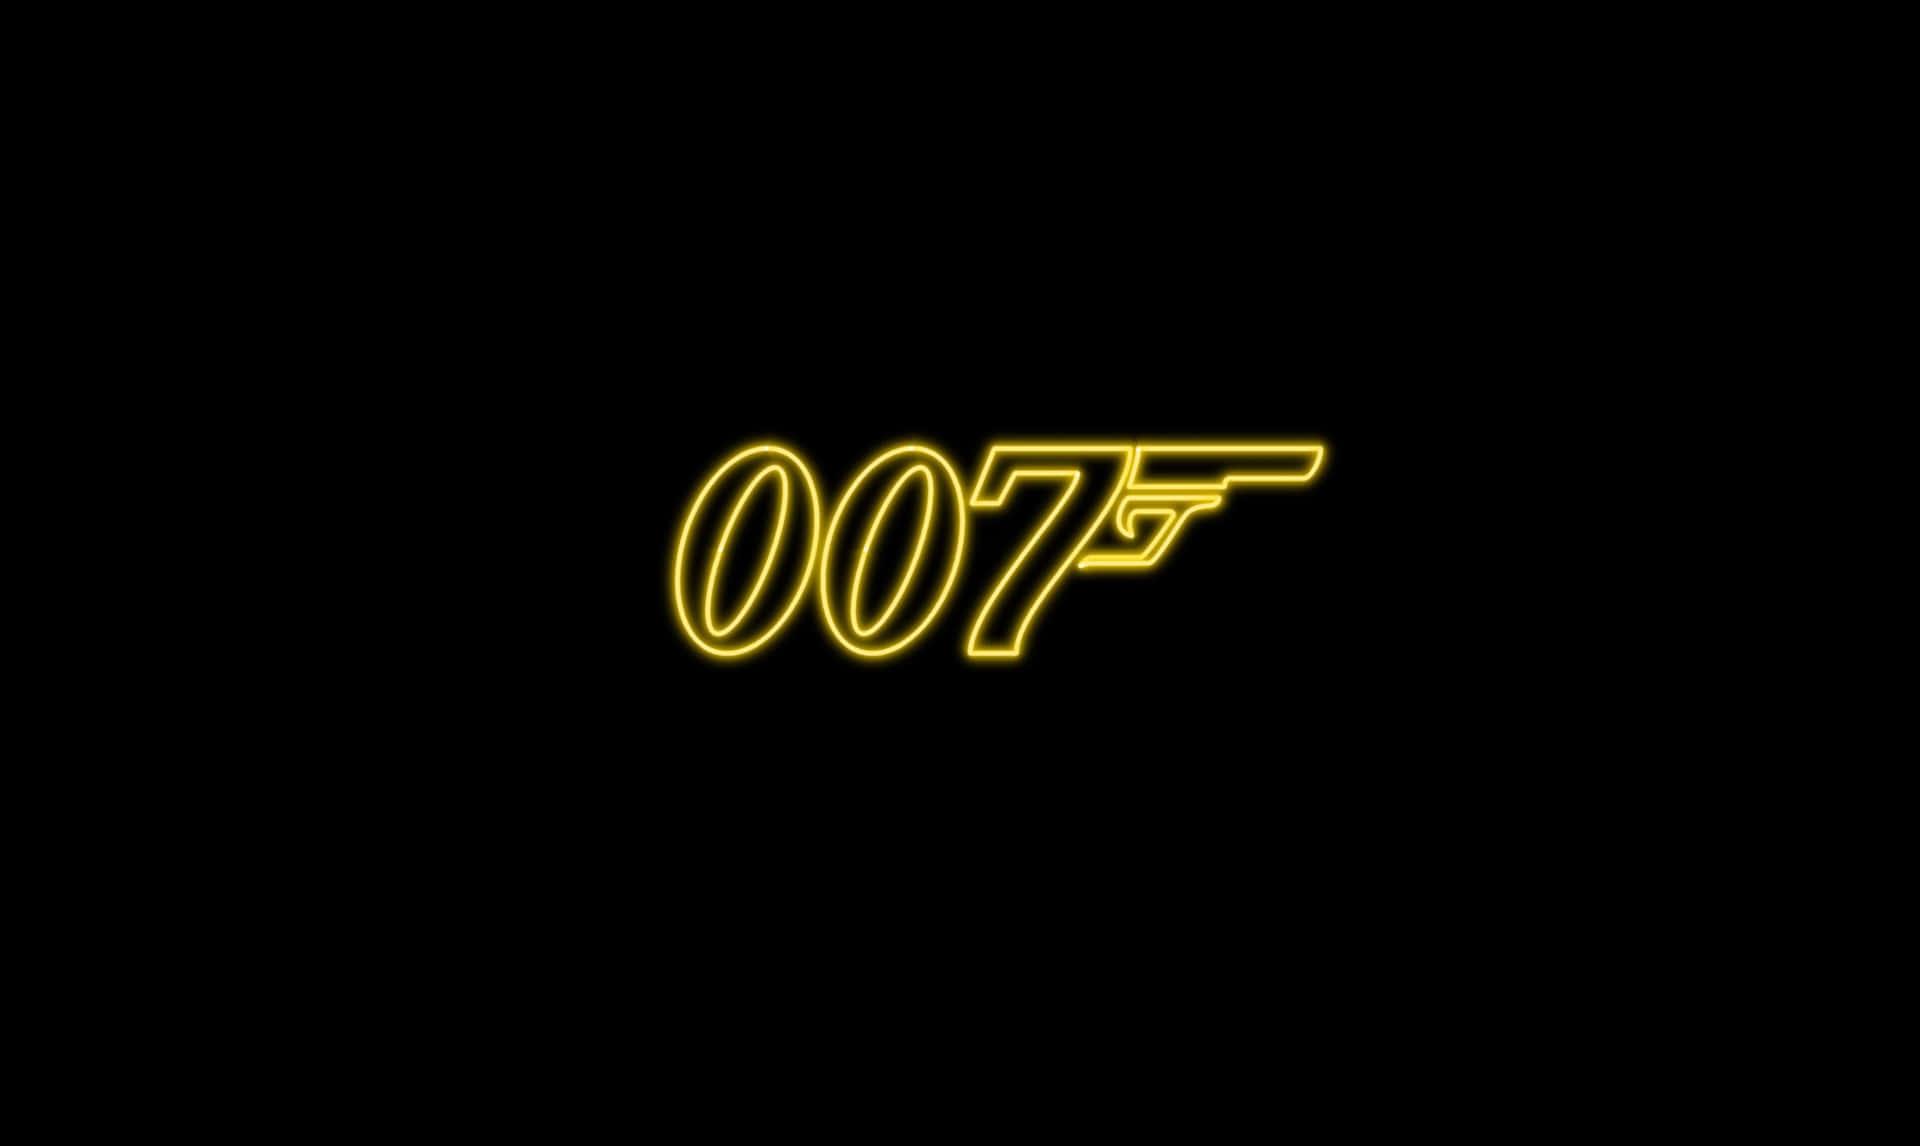 James Bond007 Iconic Logo Wallpaper